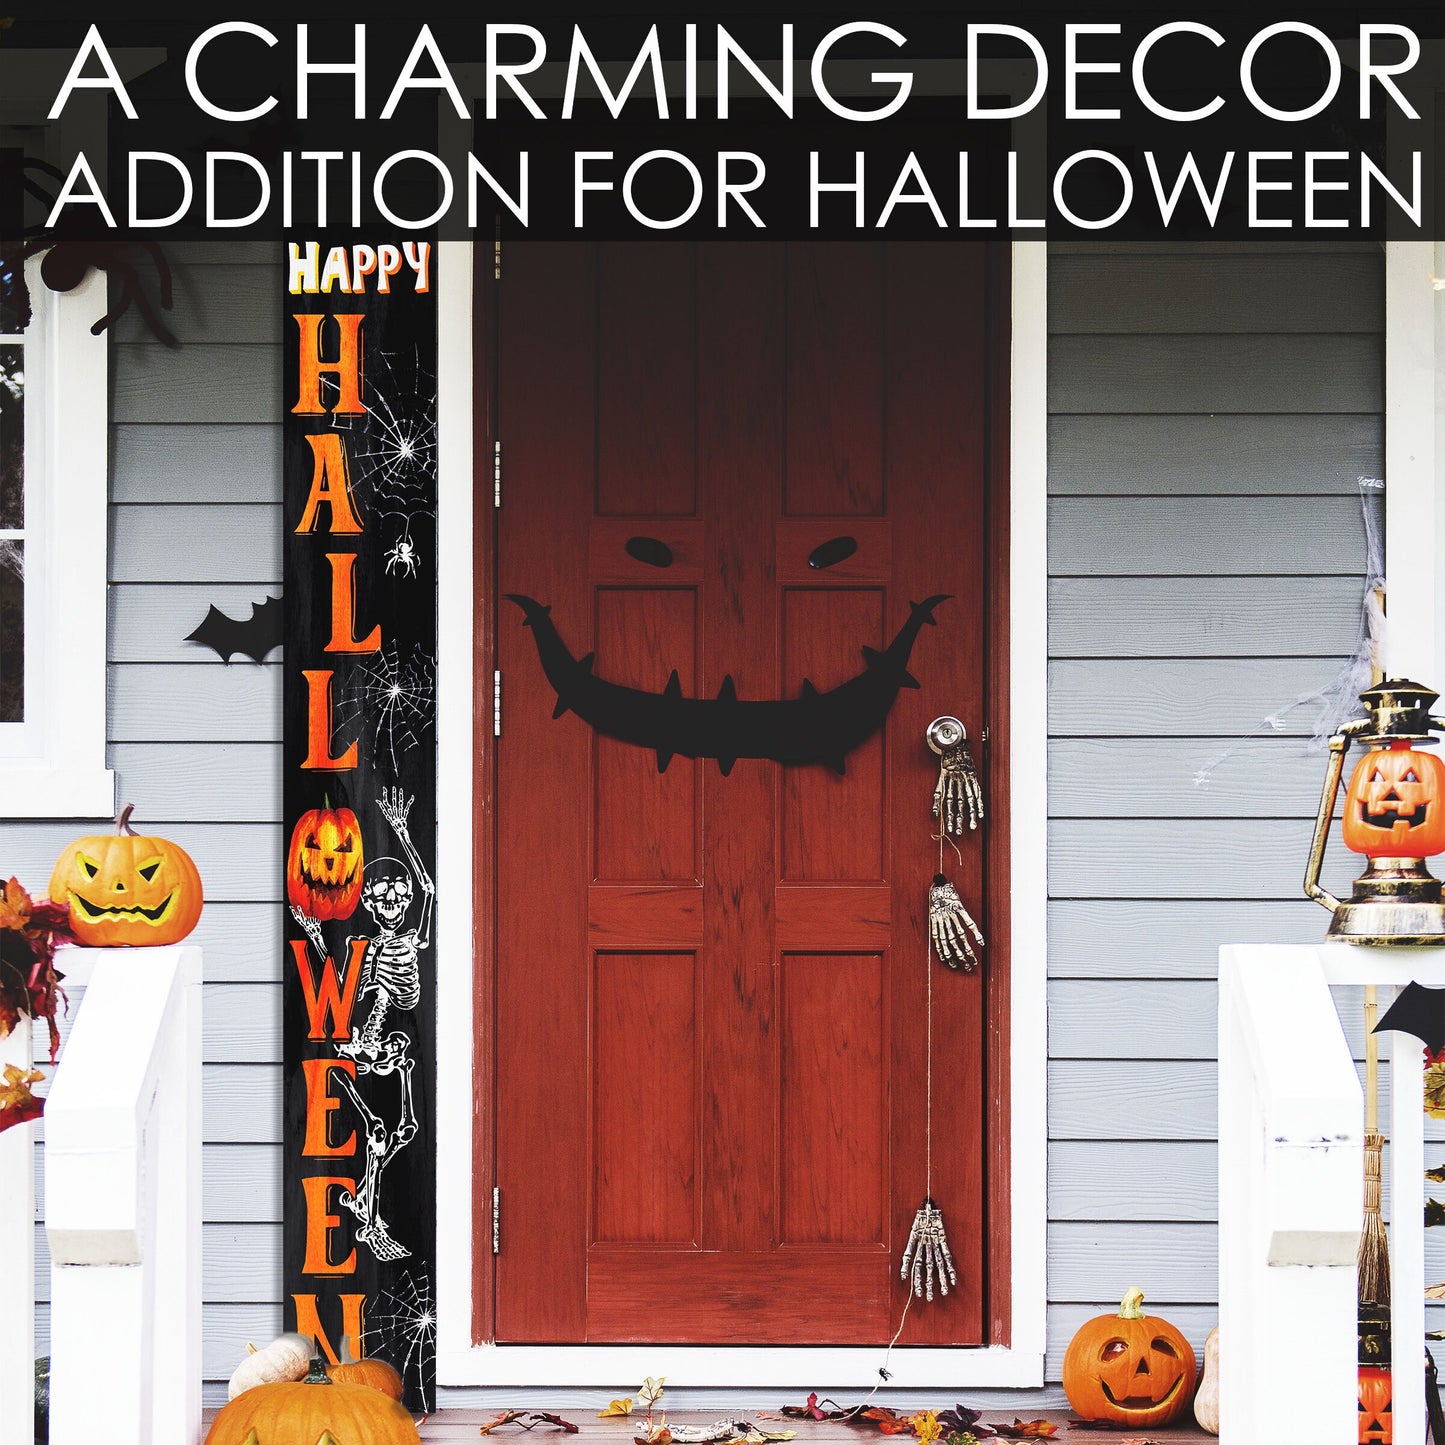 72in Wooden Happy Halloween Skeleton Welcome Porch Sign - Spooky Front Door Decor for Seasonal Celebrations, Vintage Halloween Decoration